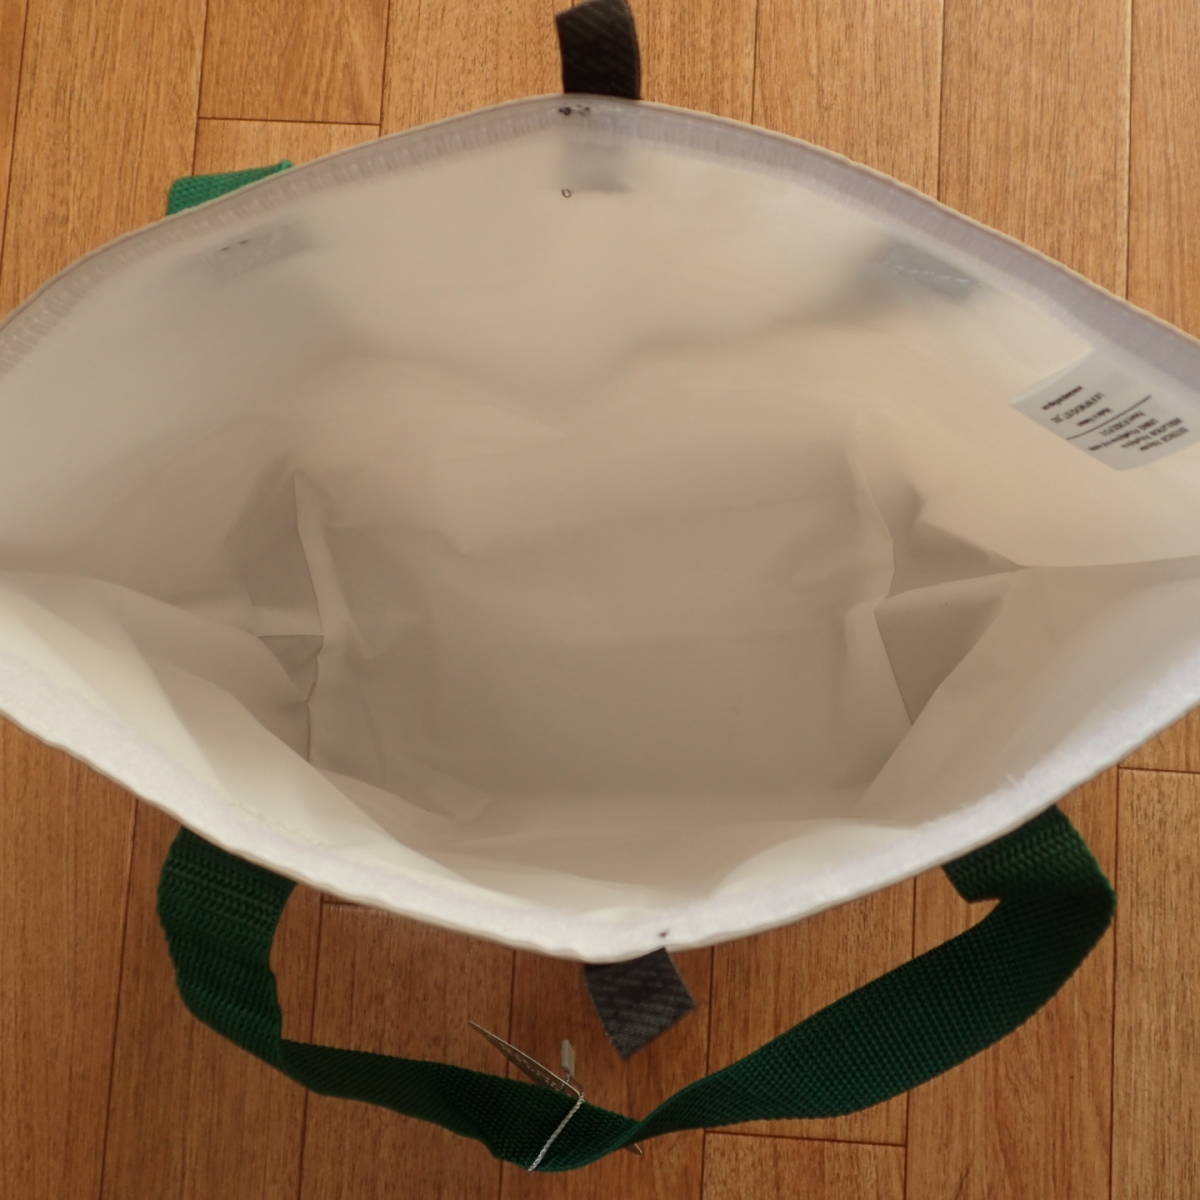 @@ unused hole f-z heat insulation bag keep cool bag eko-bag 2 point set WHOLE FOODS MARKET tote bag 